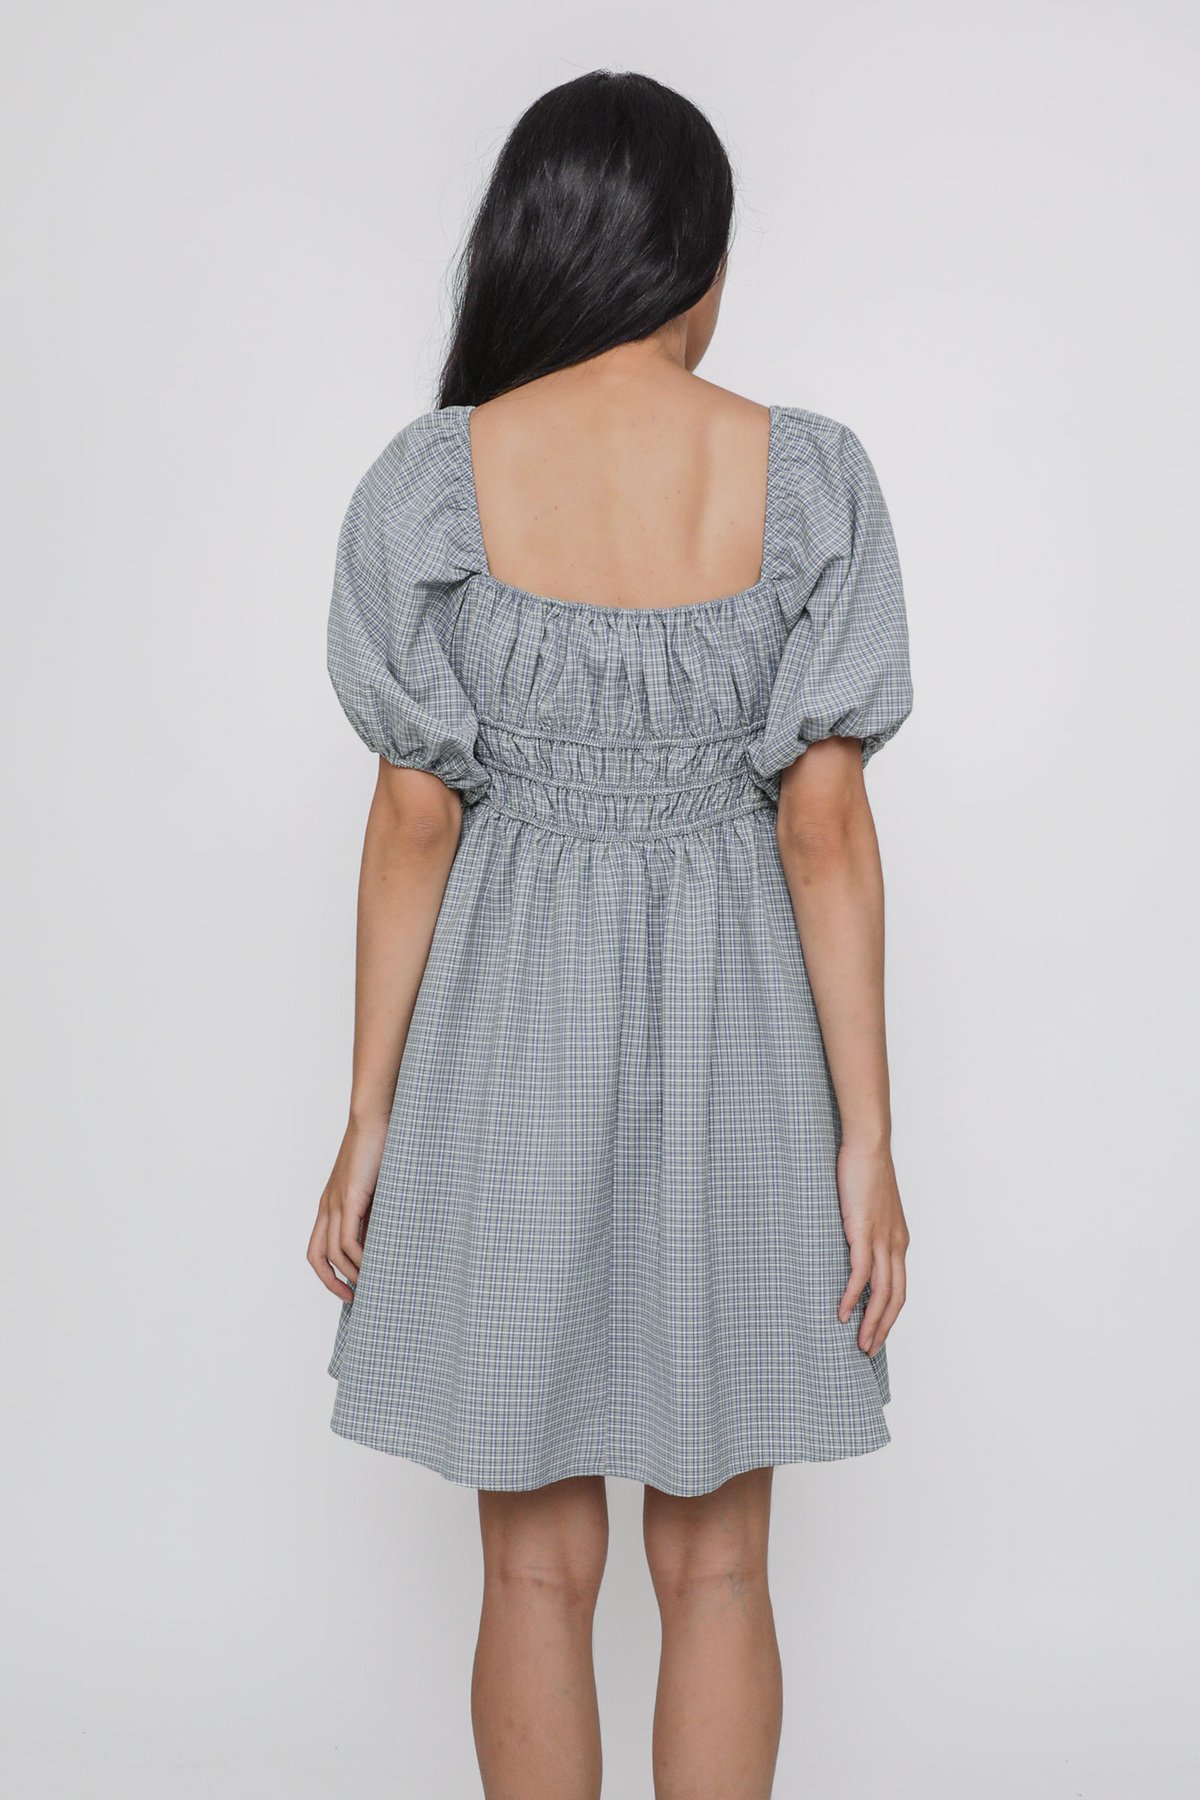 Adalyn Shirred Puffy Sleeved Dress (Plaids)